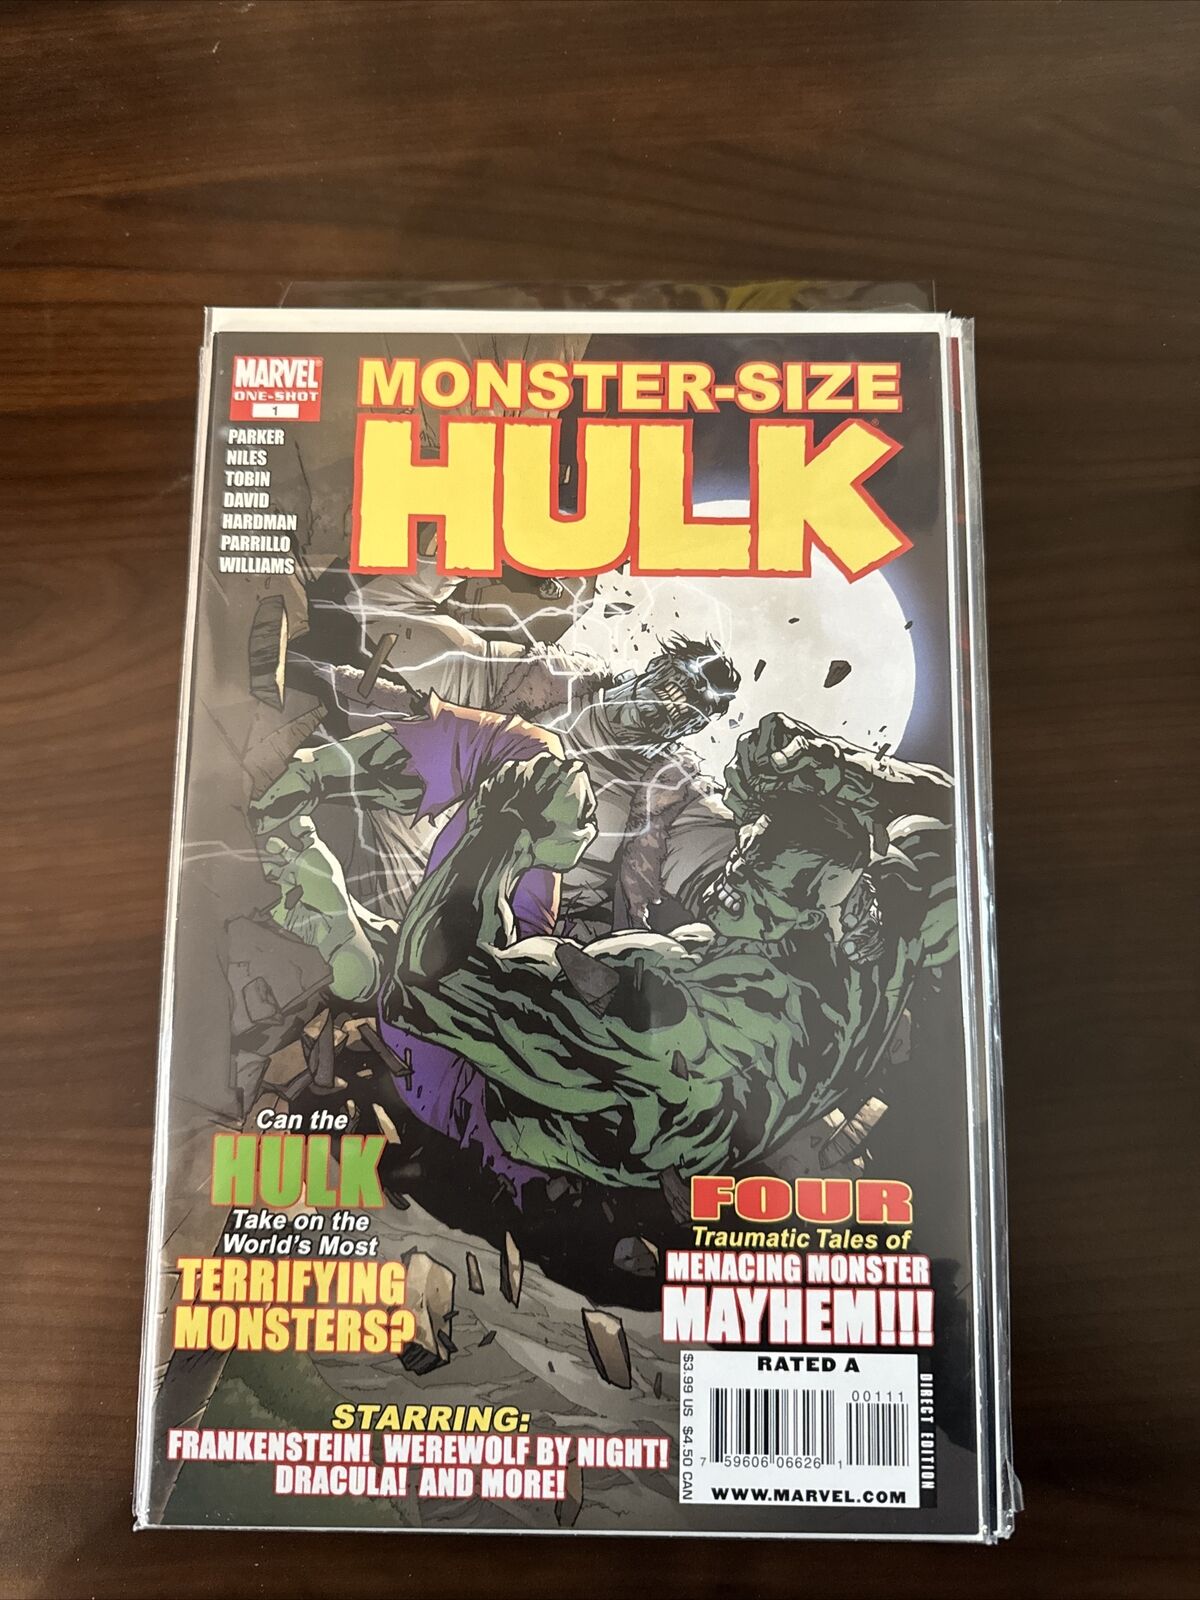 Hulk Monster-Size Special #1 (Marvel, December 2008)